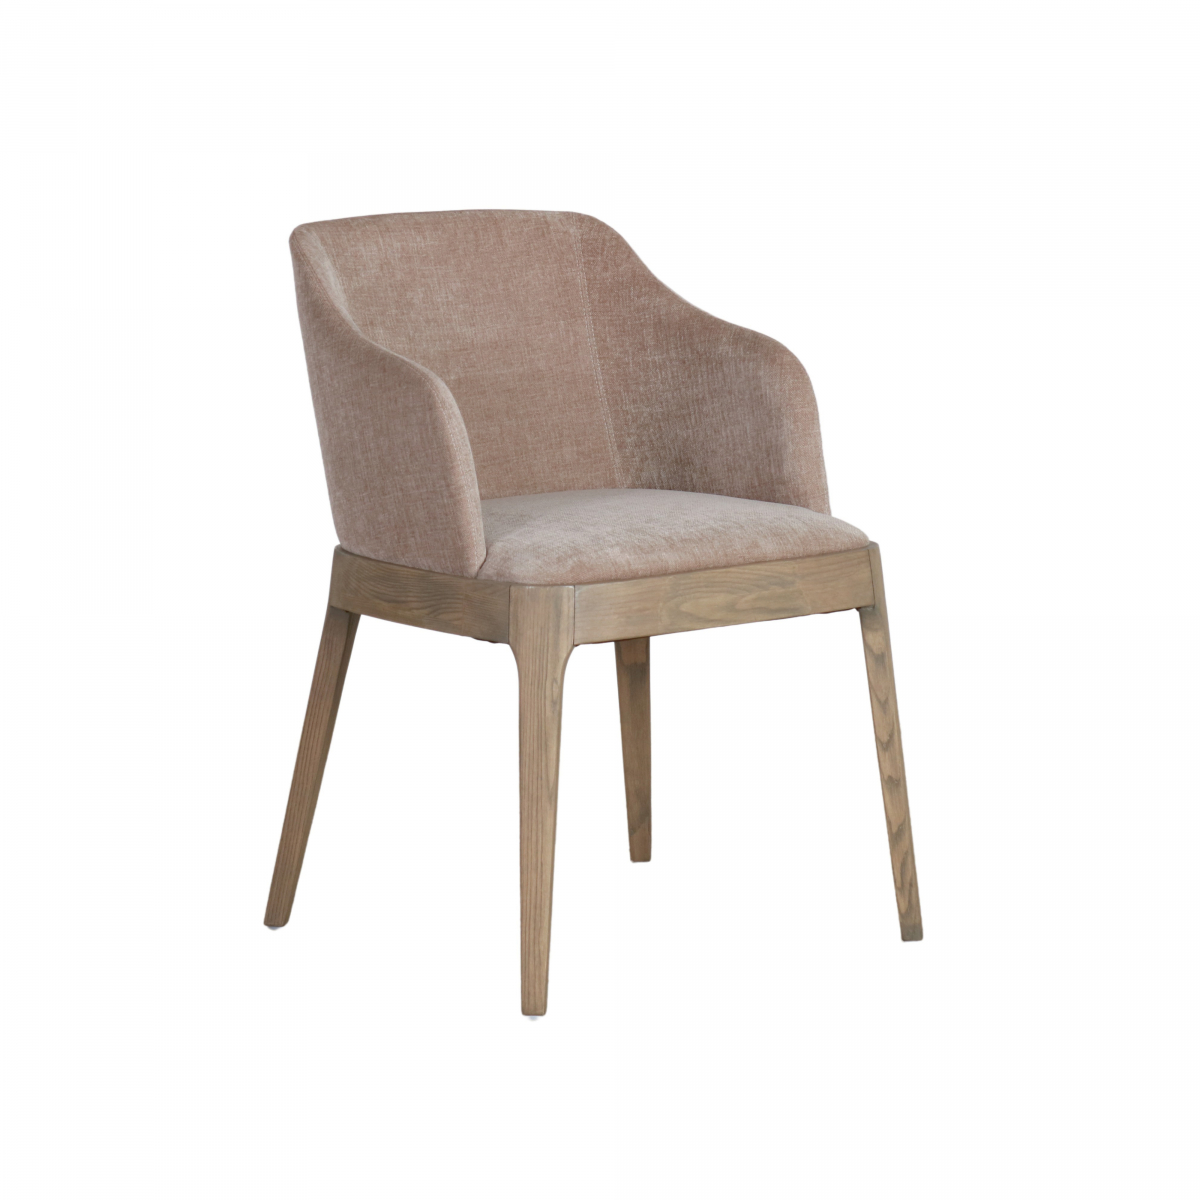 stone colour modern carver chair ashwood legs